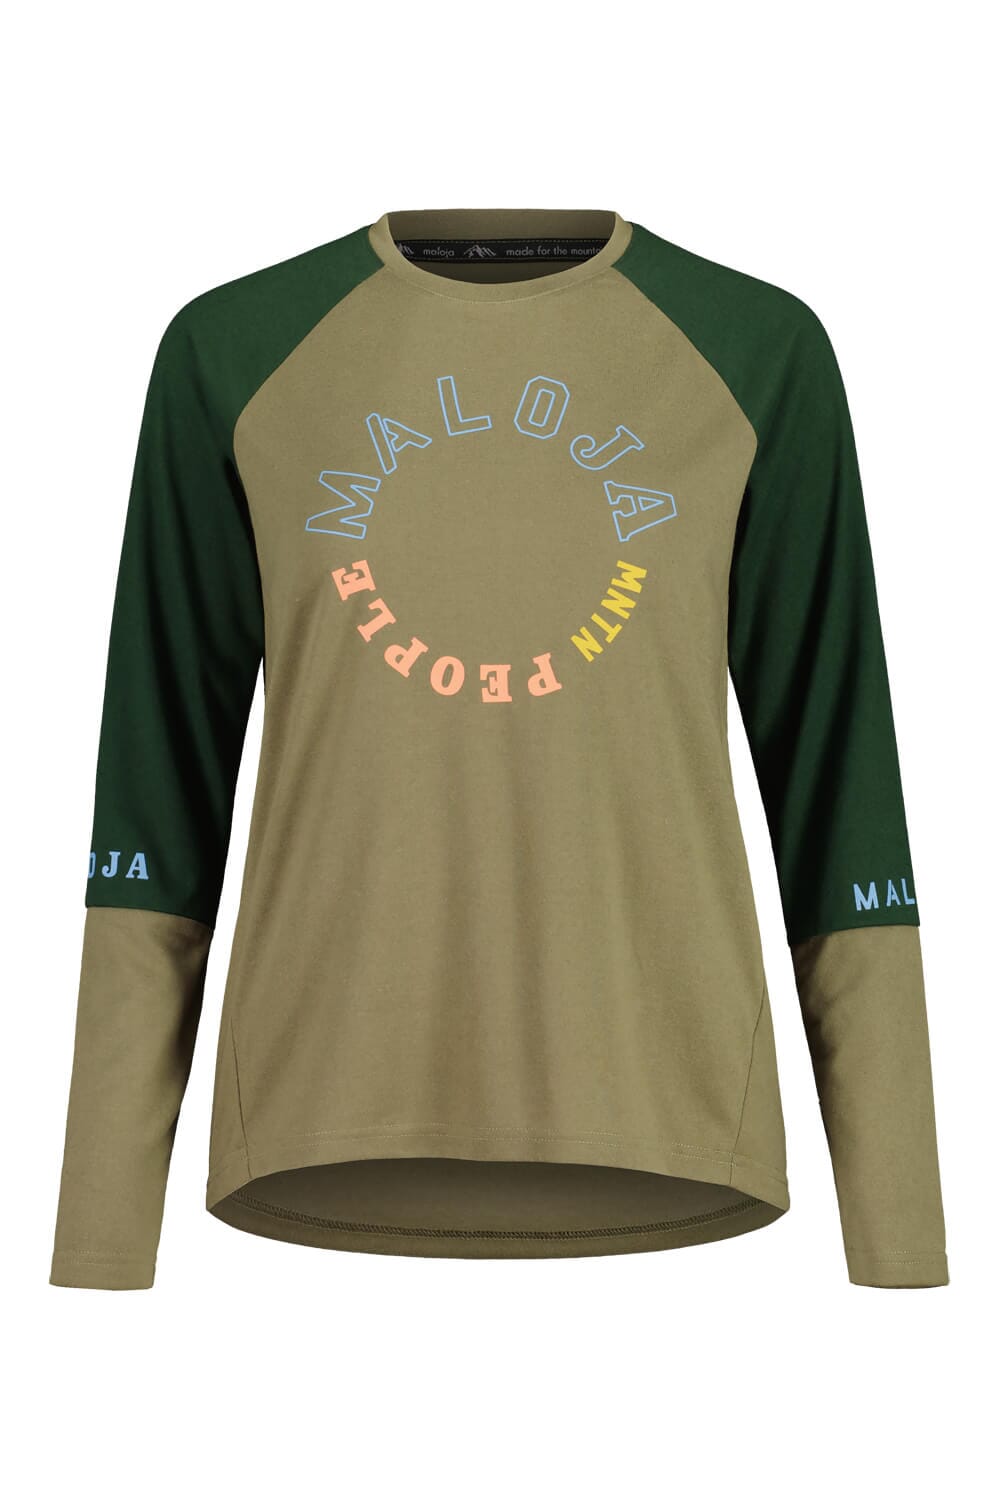 Maloja - W's DiamondM. MTB shirt - Recycled Polyester & Hemp - Weekendbee - sustainable sportswear